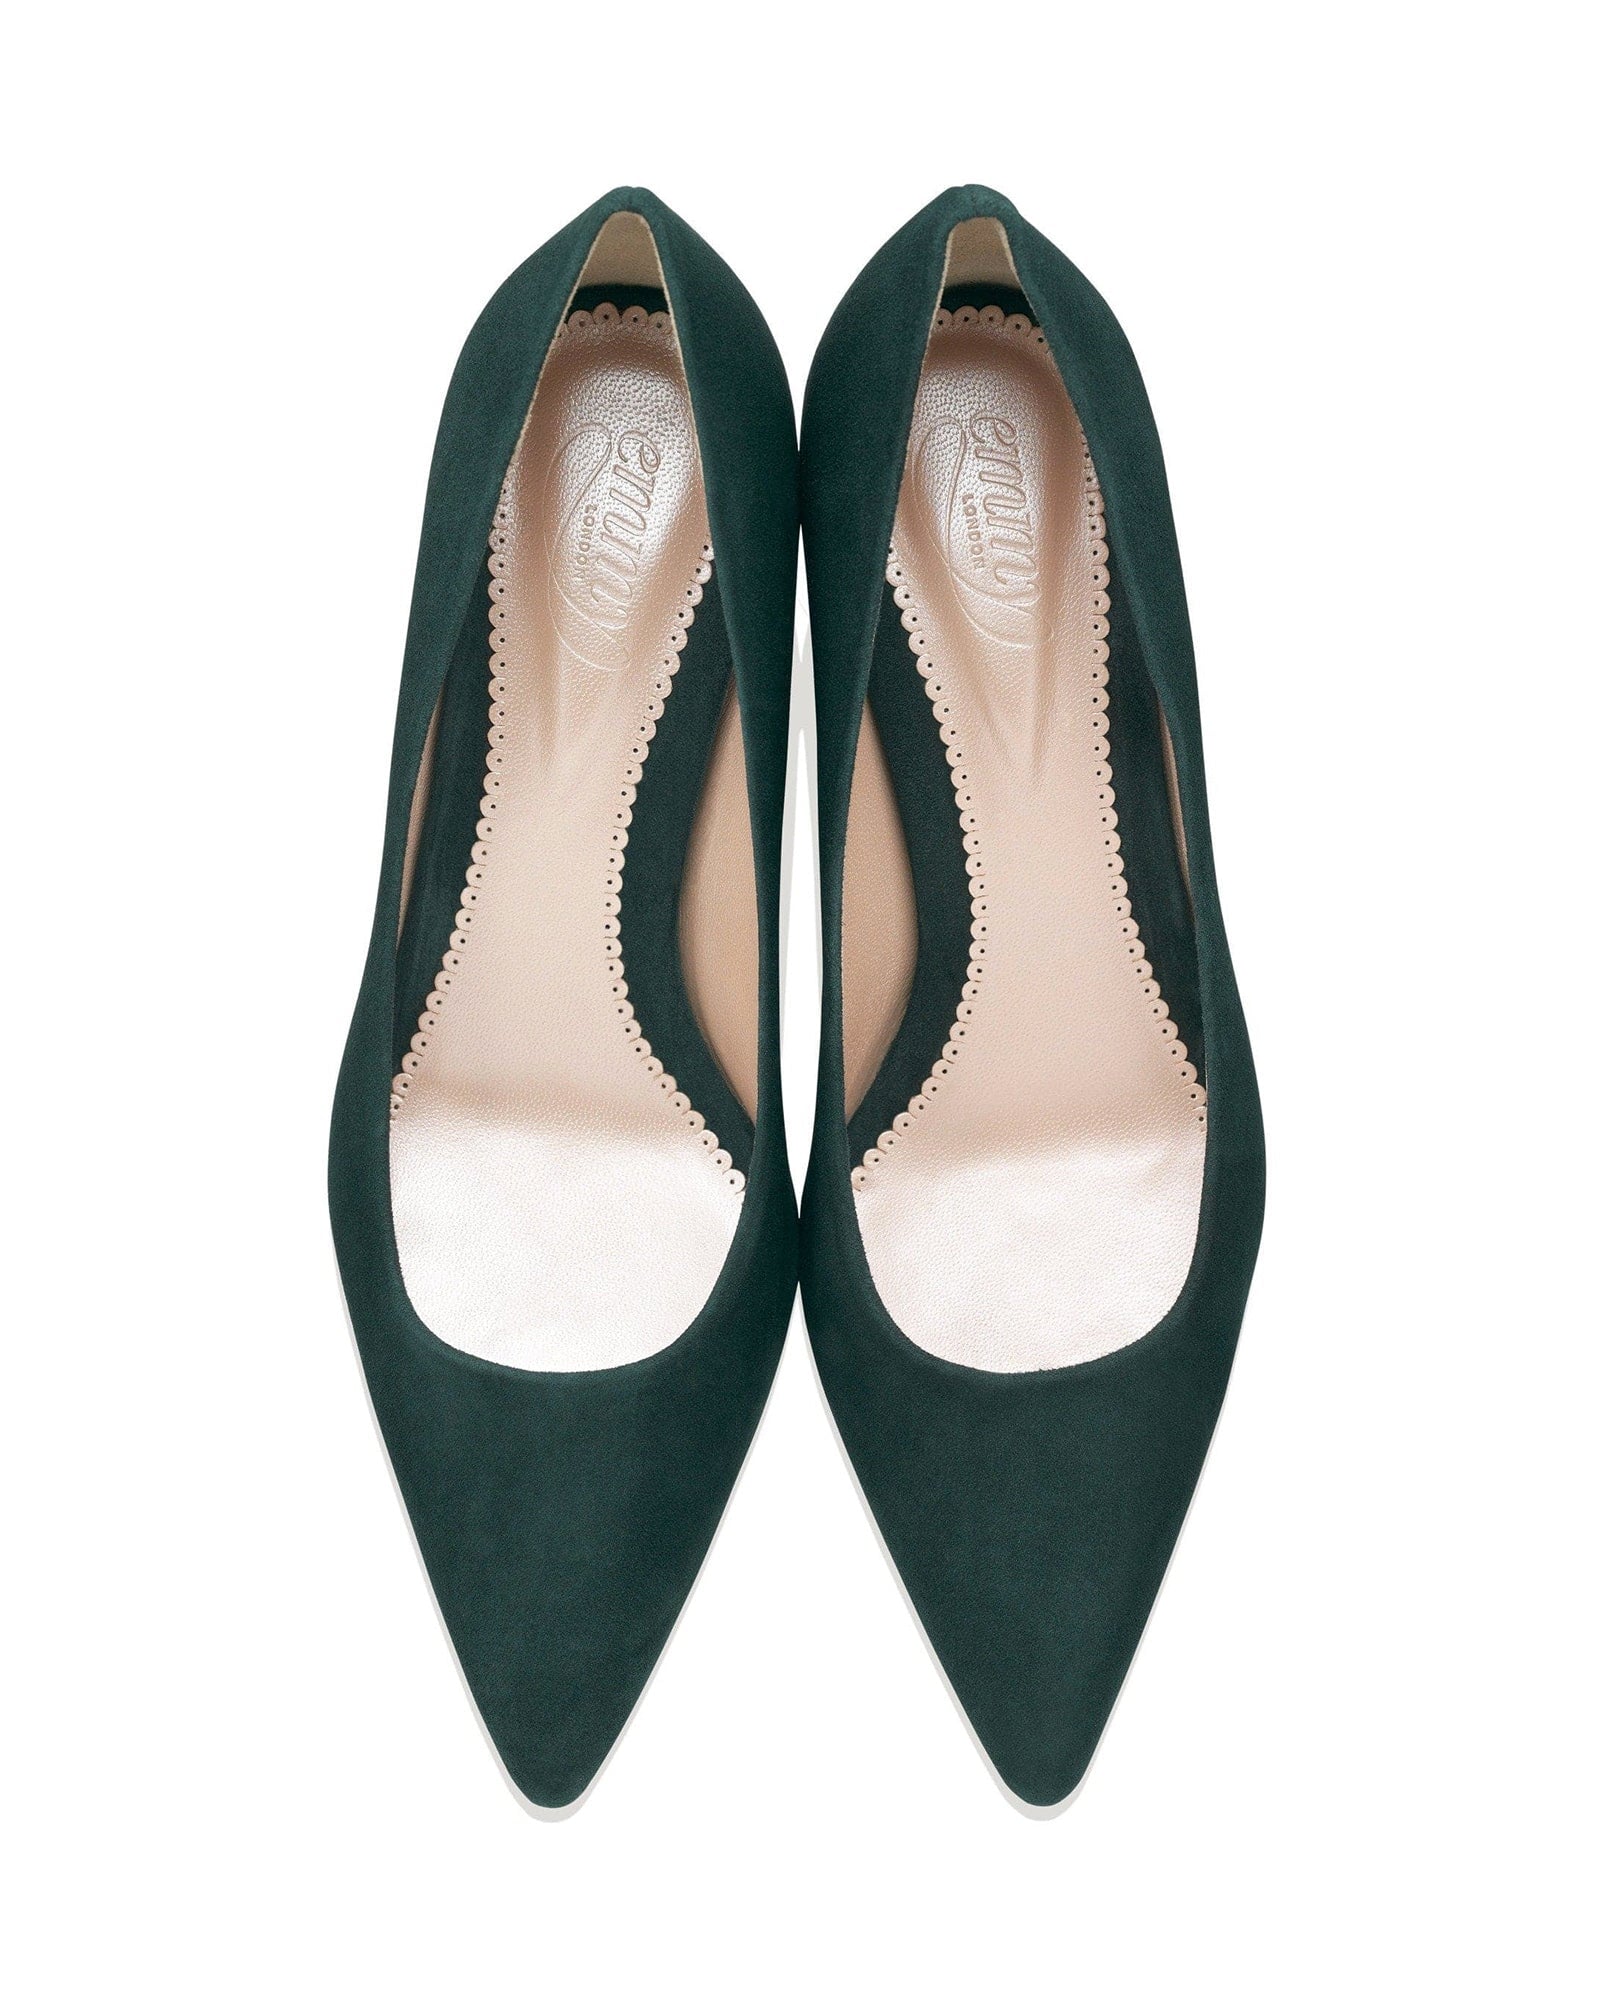 Josie Kitten Greenery Fashion Shoe Green Block Heel Court Shoe  image